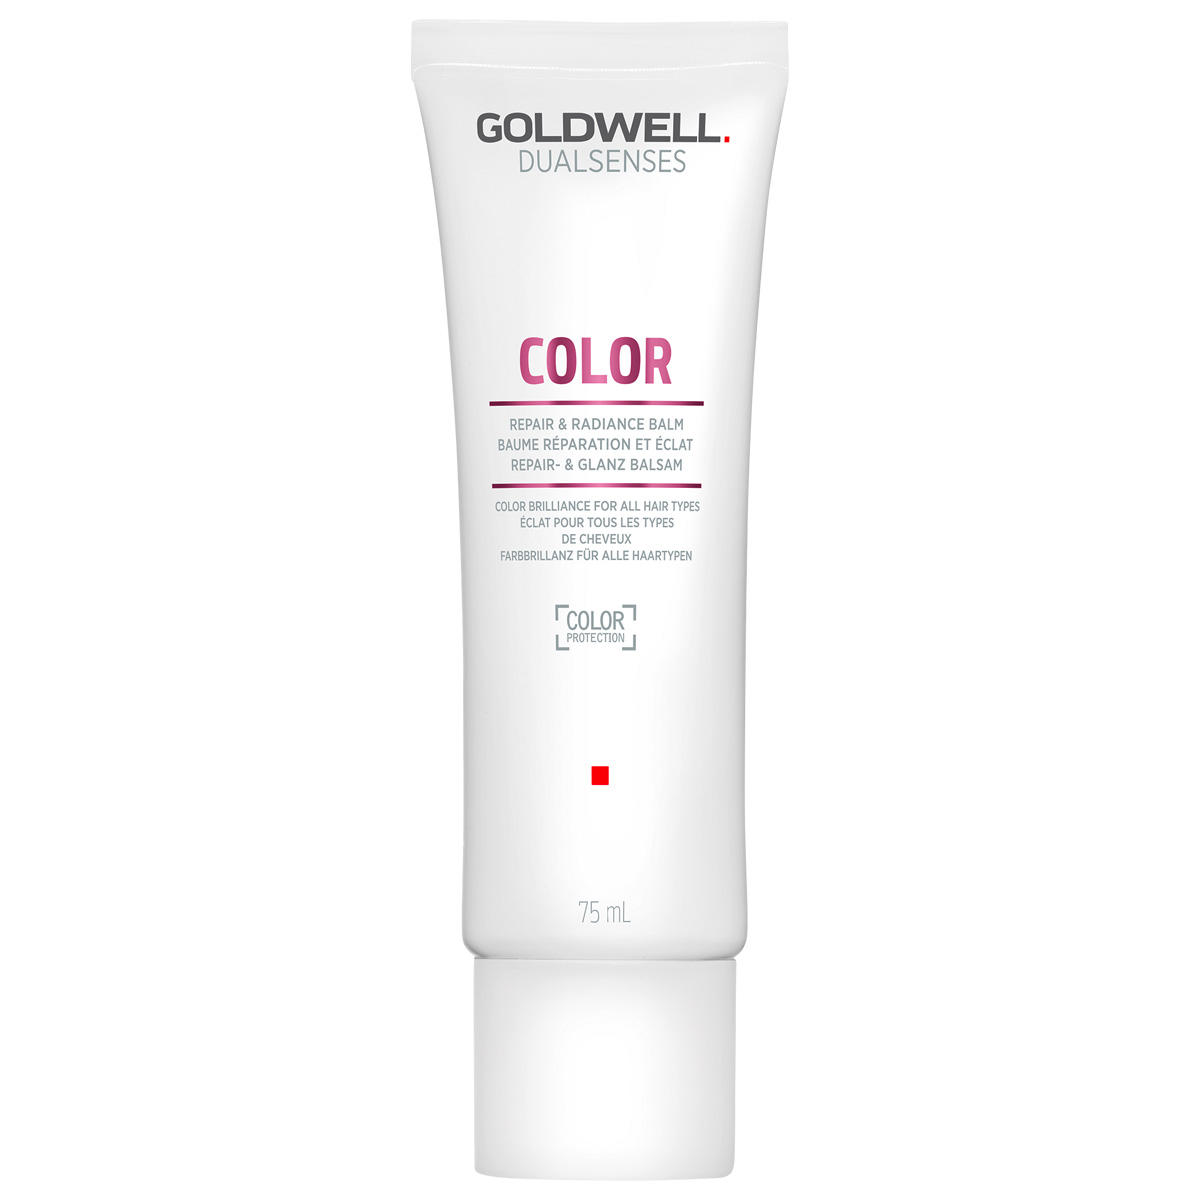 Goldwell Dualsenses Color Repair & Radiance Balm 75 ml - 1